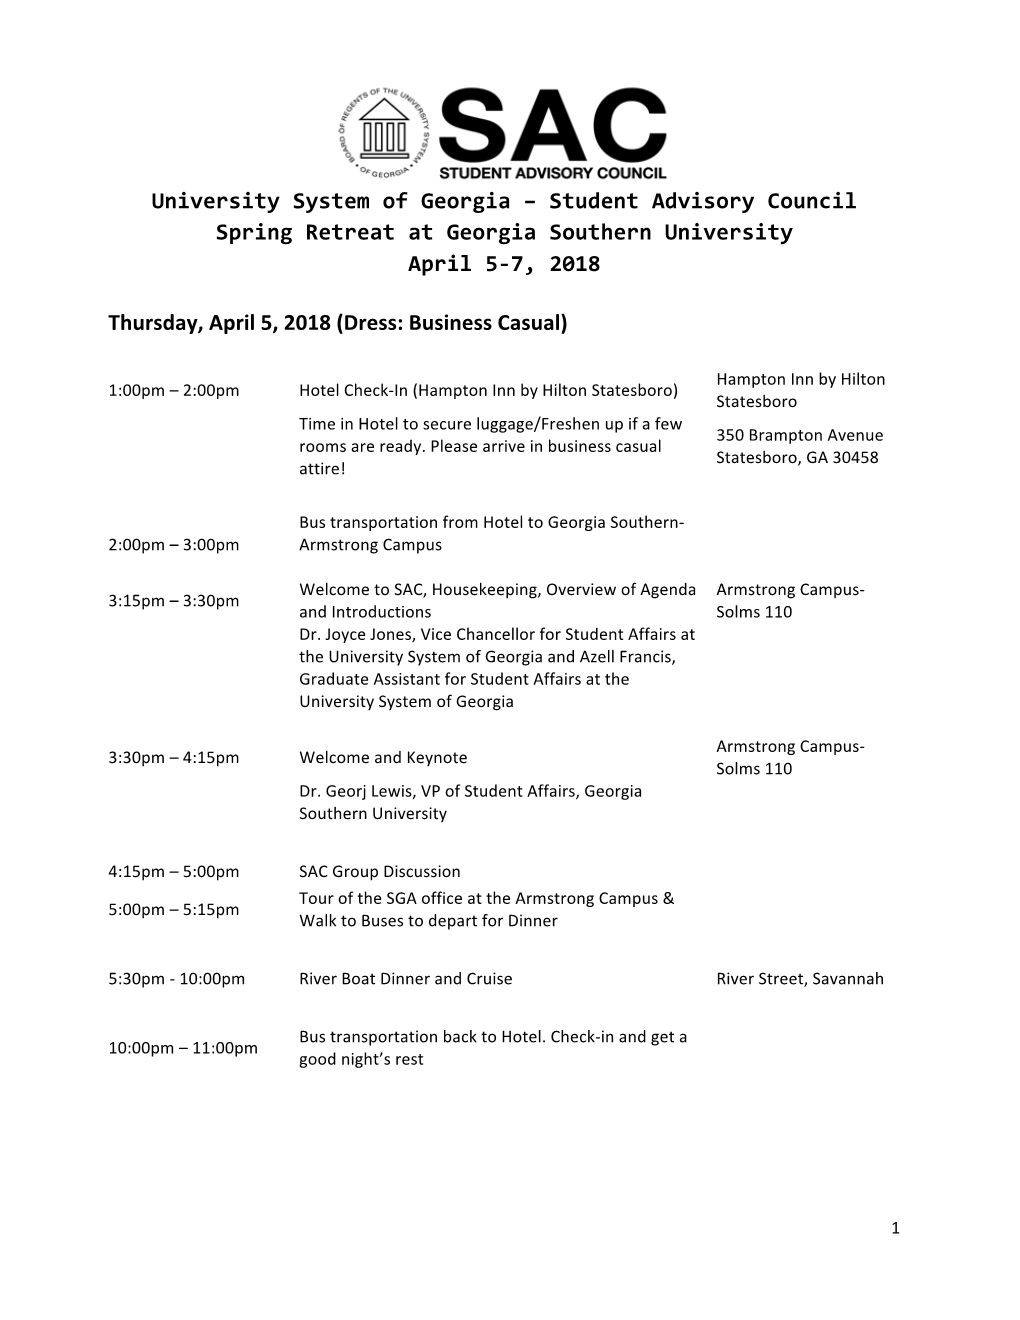 Student Advisory Council Spring Retreat at Georgia Southern University April 5-7, 2018